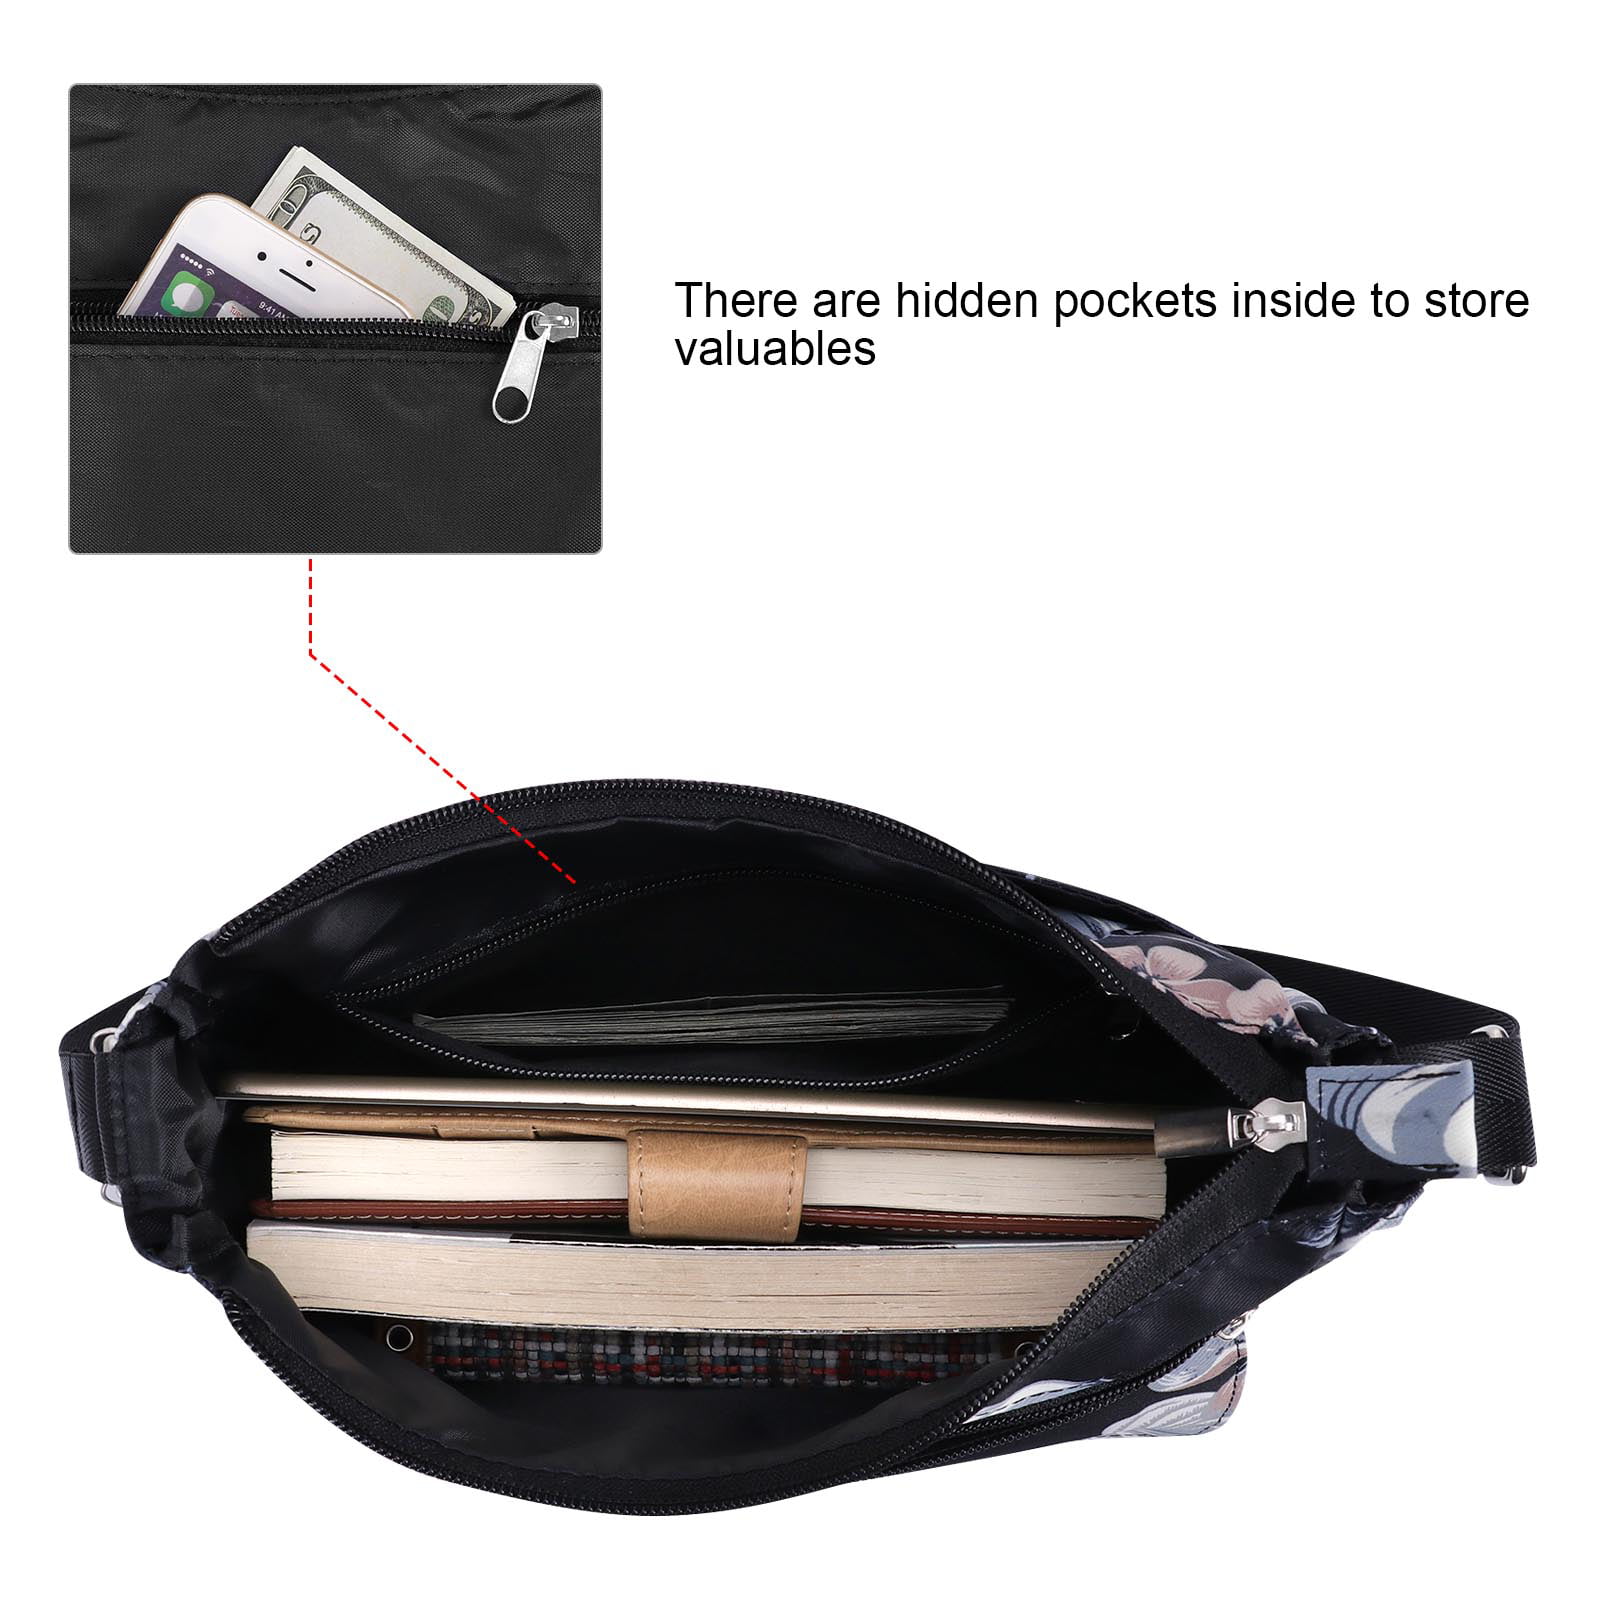 ihreesy Crossbody Shoulder Bag,Multi Compartment Phone Purse Bag with  Adjustable Shoulder Strap Purse